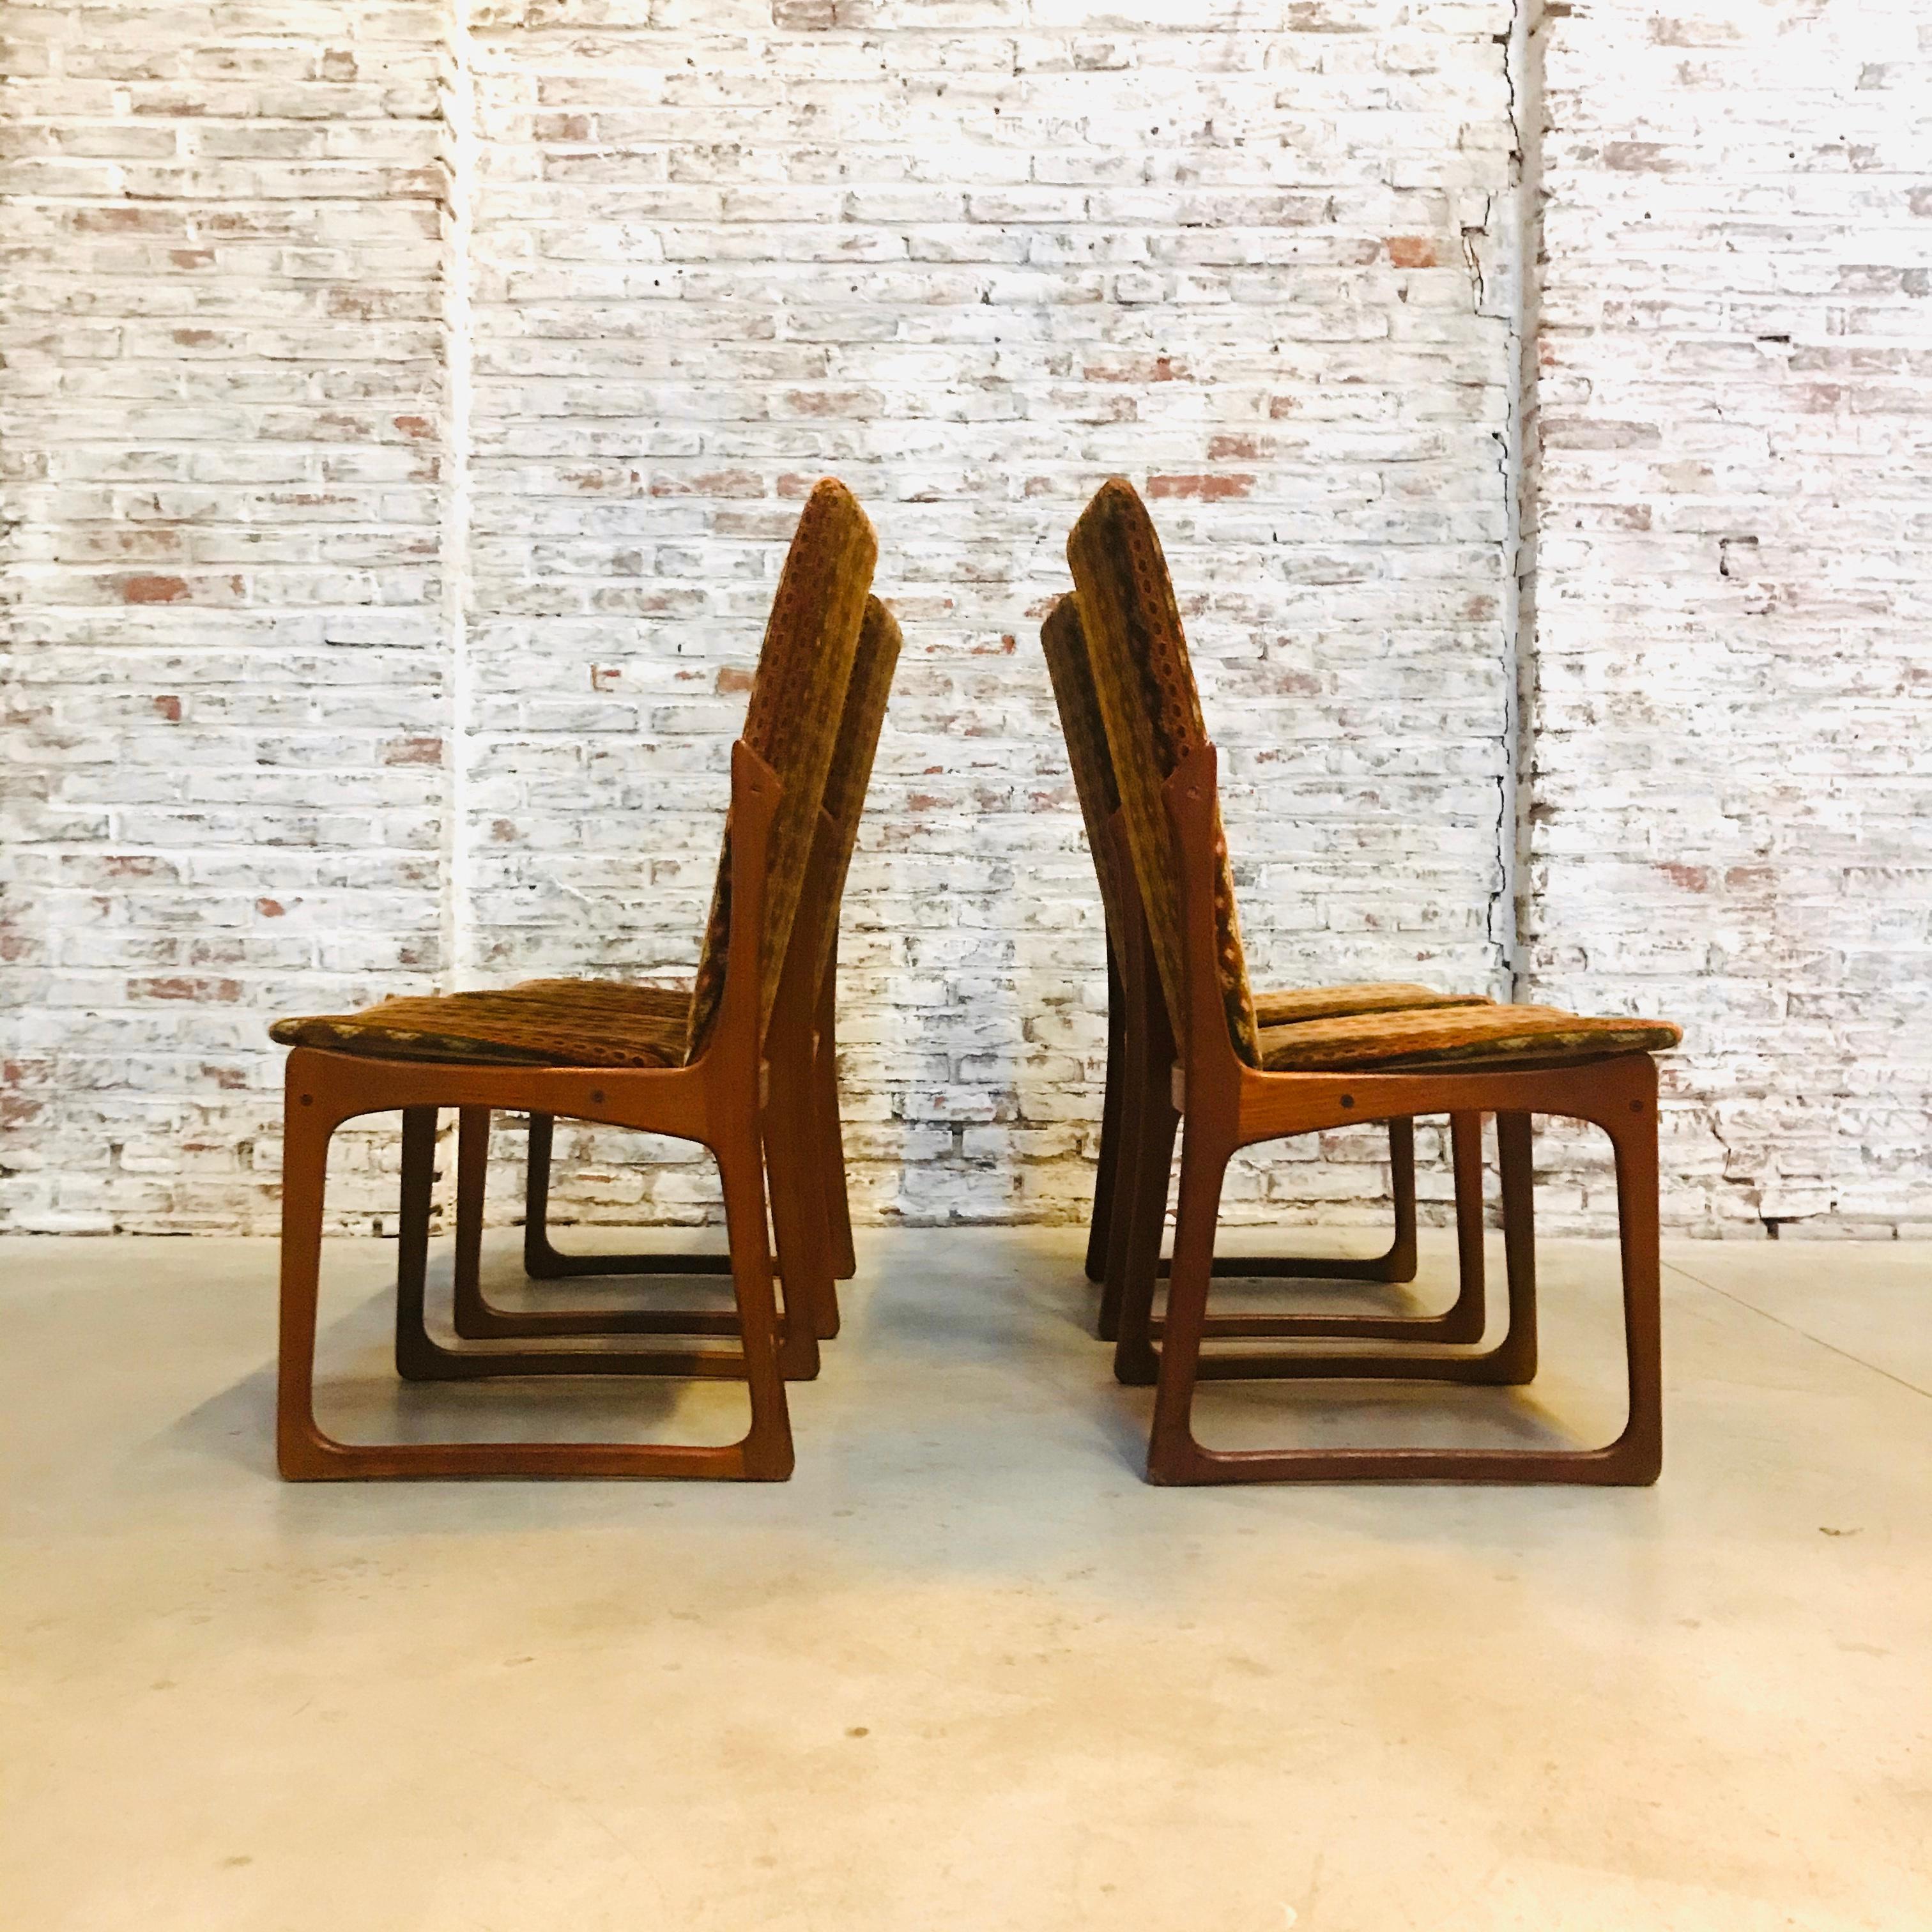 Midcentury Danish Teak Dining Chairs by Vamdrup Stölefabrik, Set of 4, 1960s For Sale 7